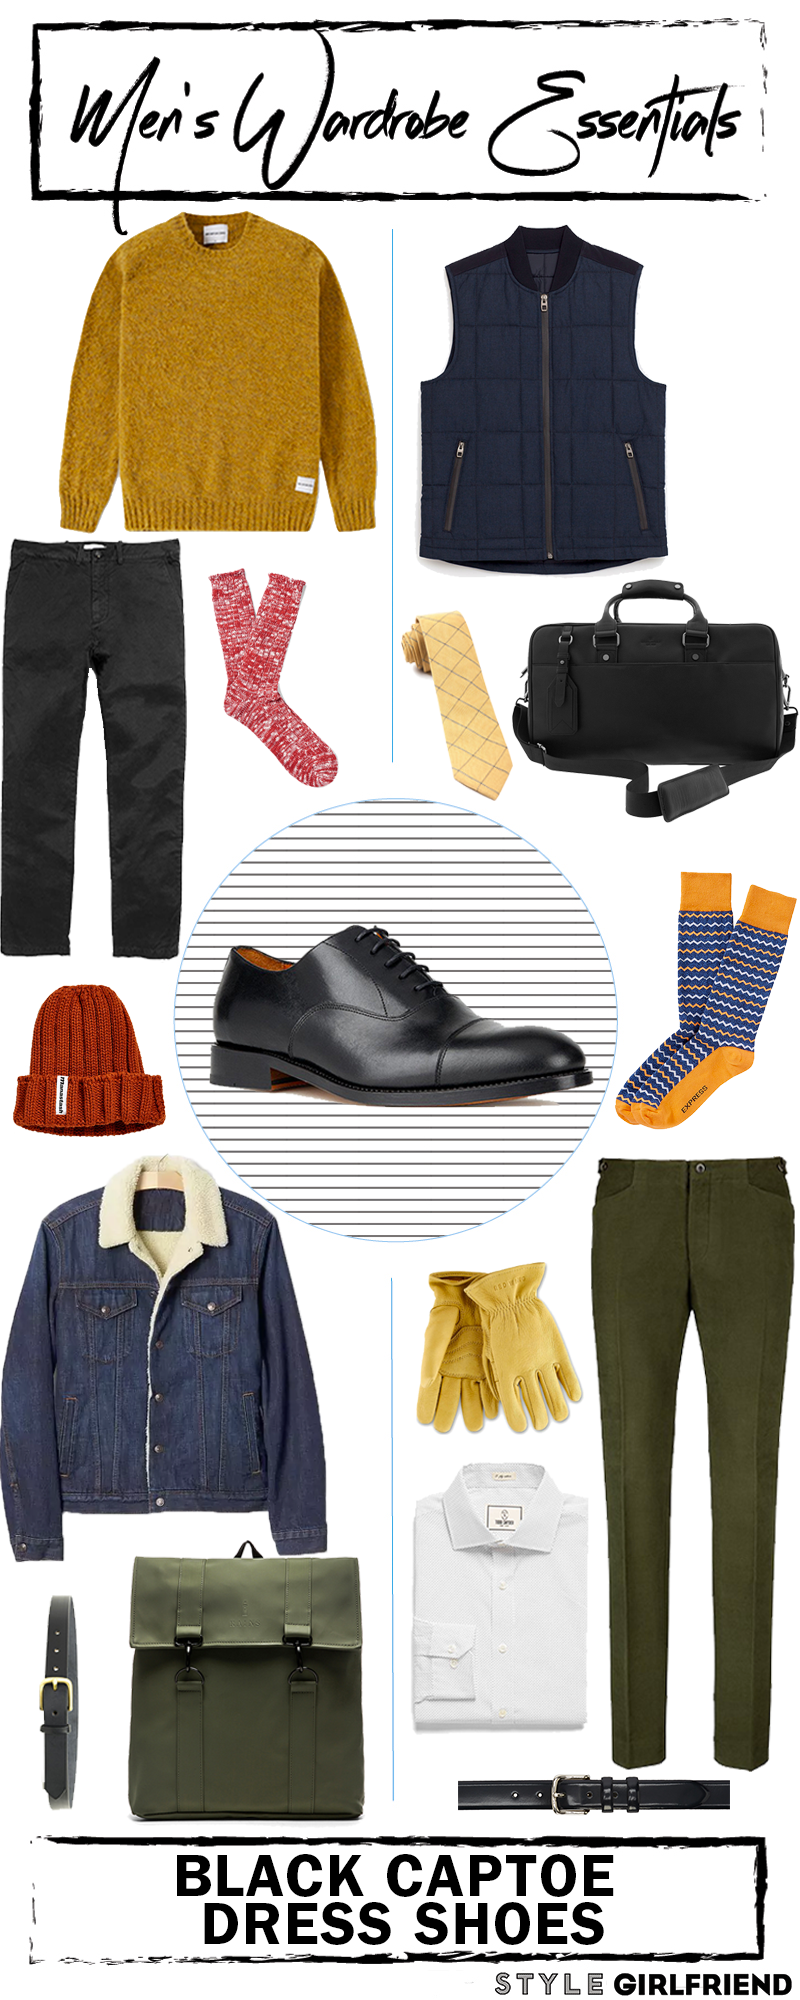 mens wardrobe essentials, menswear laydown, black captoe shoes,